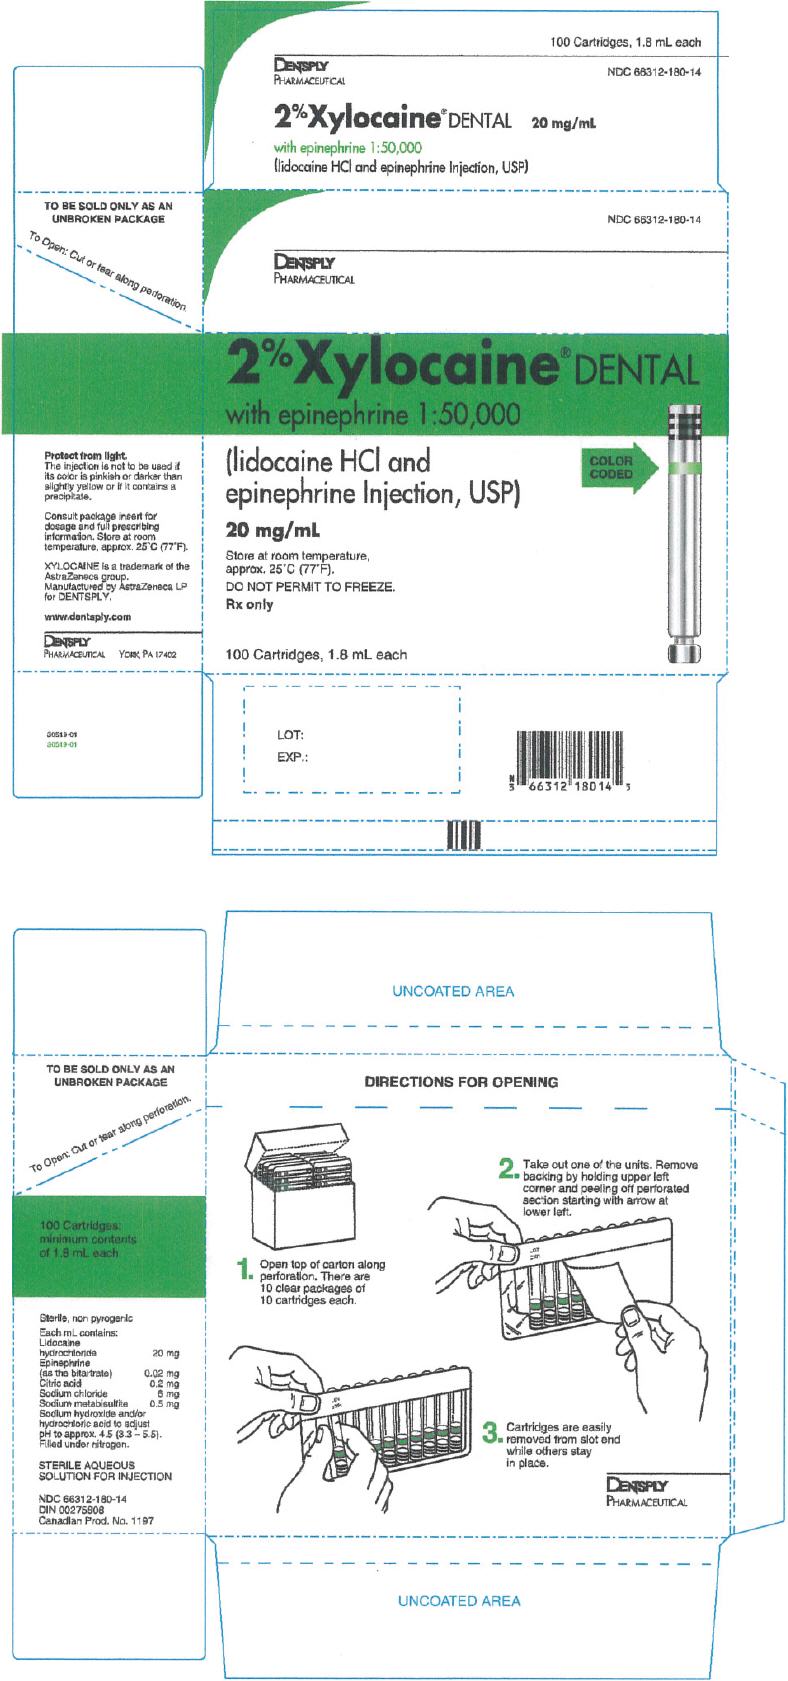 PRINCIPAL DISPLAY PANEL - 1.8 mL Cartridge Carton (Green)